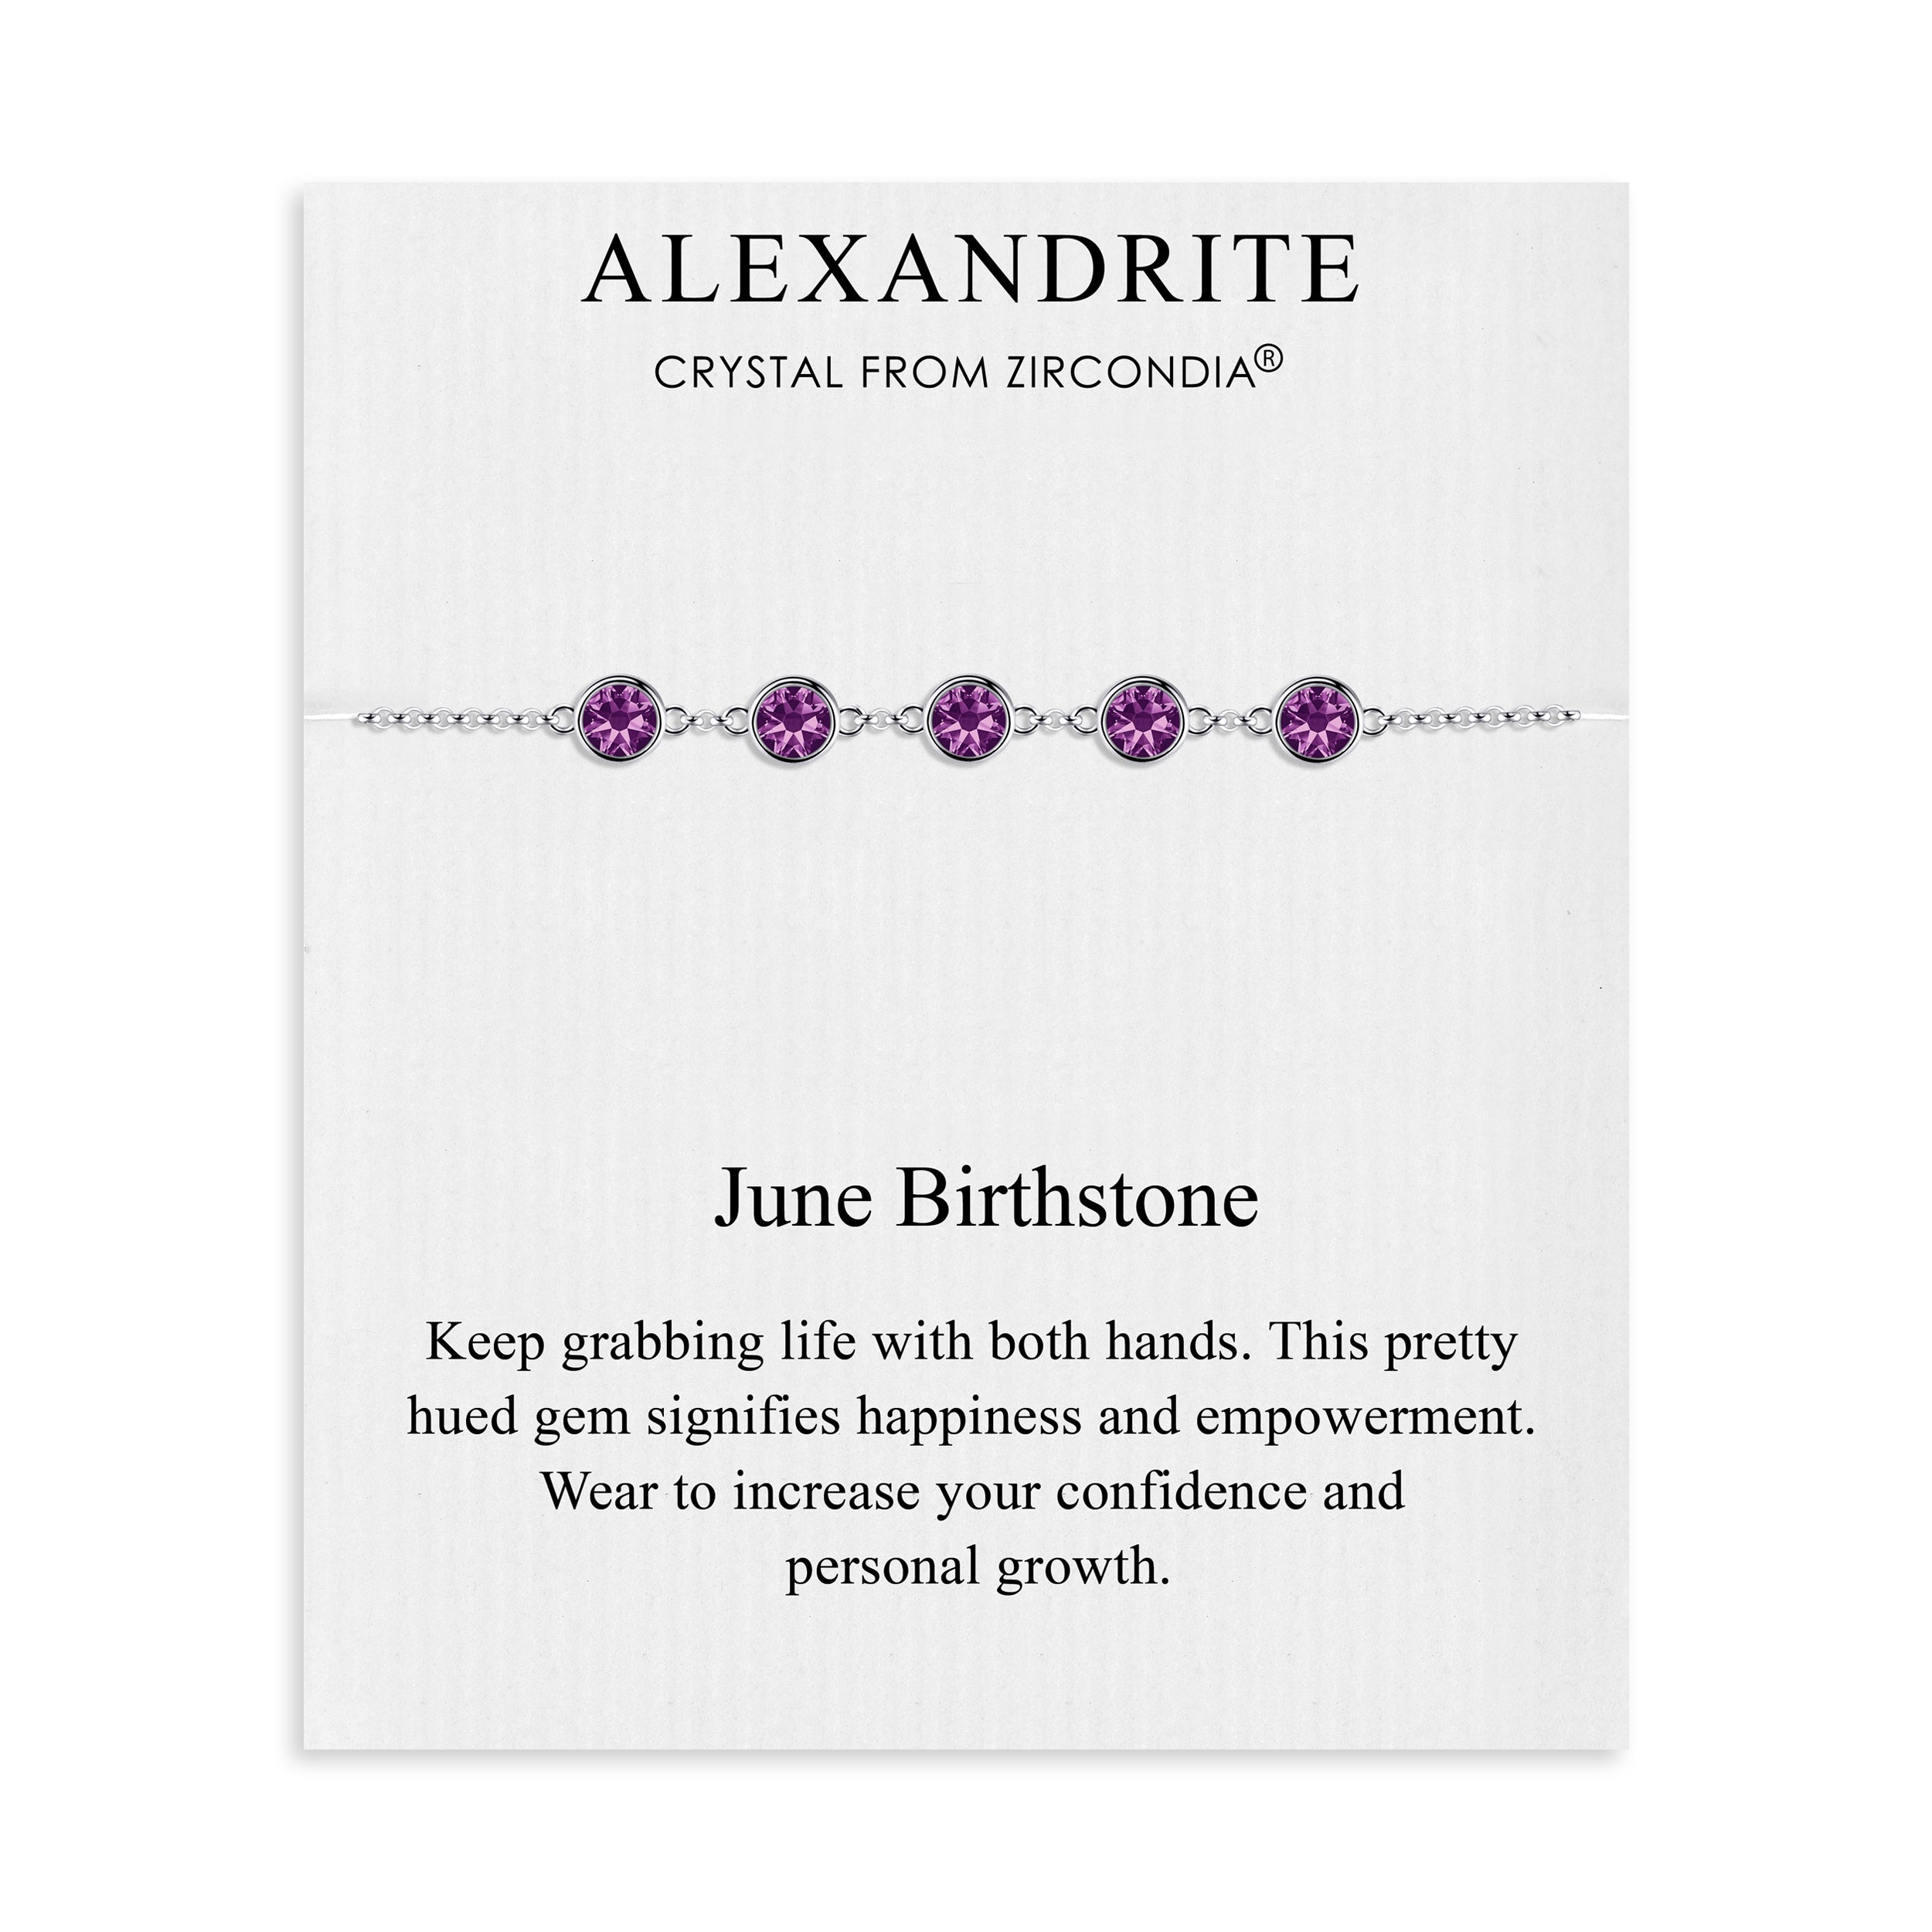 June Birthstone Bracelet Created with Alexandrite Zircondia® Crystals